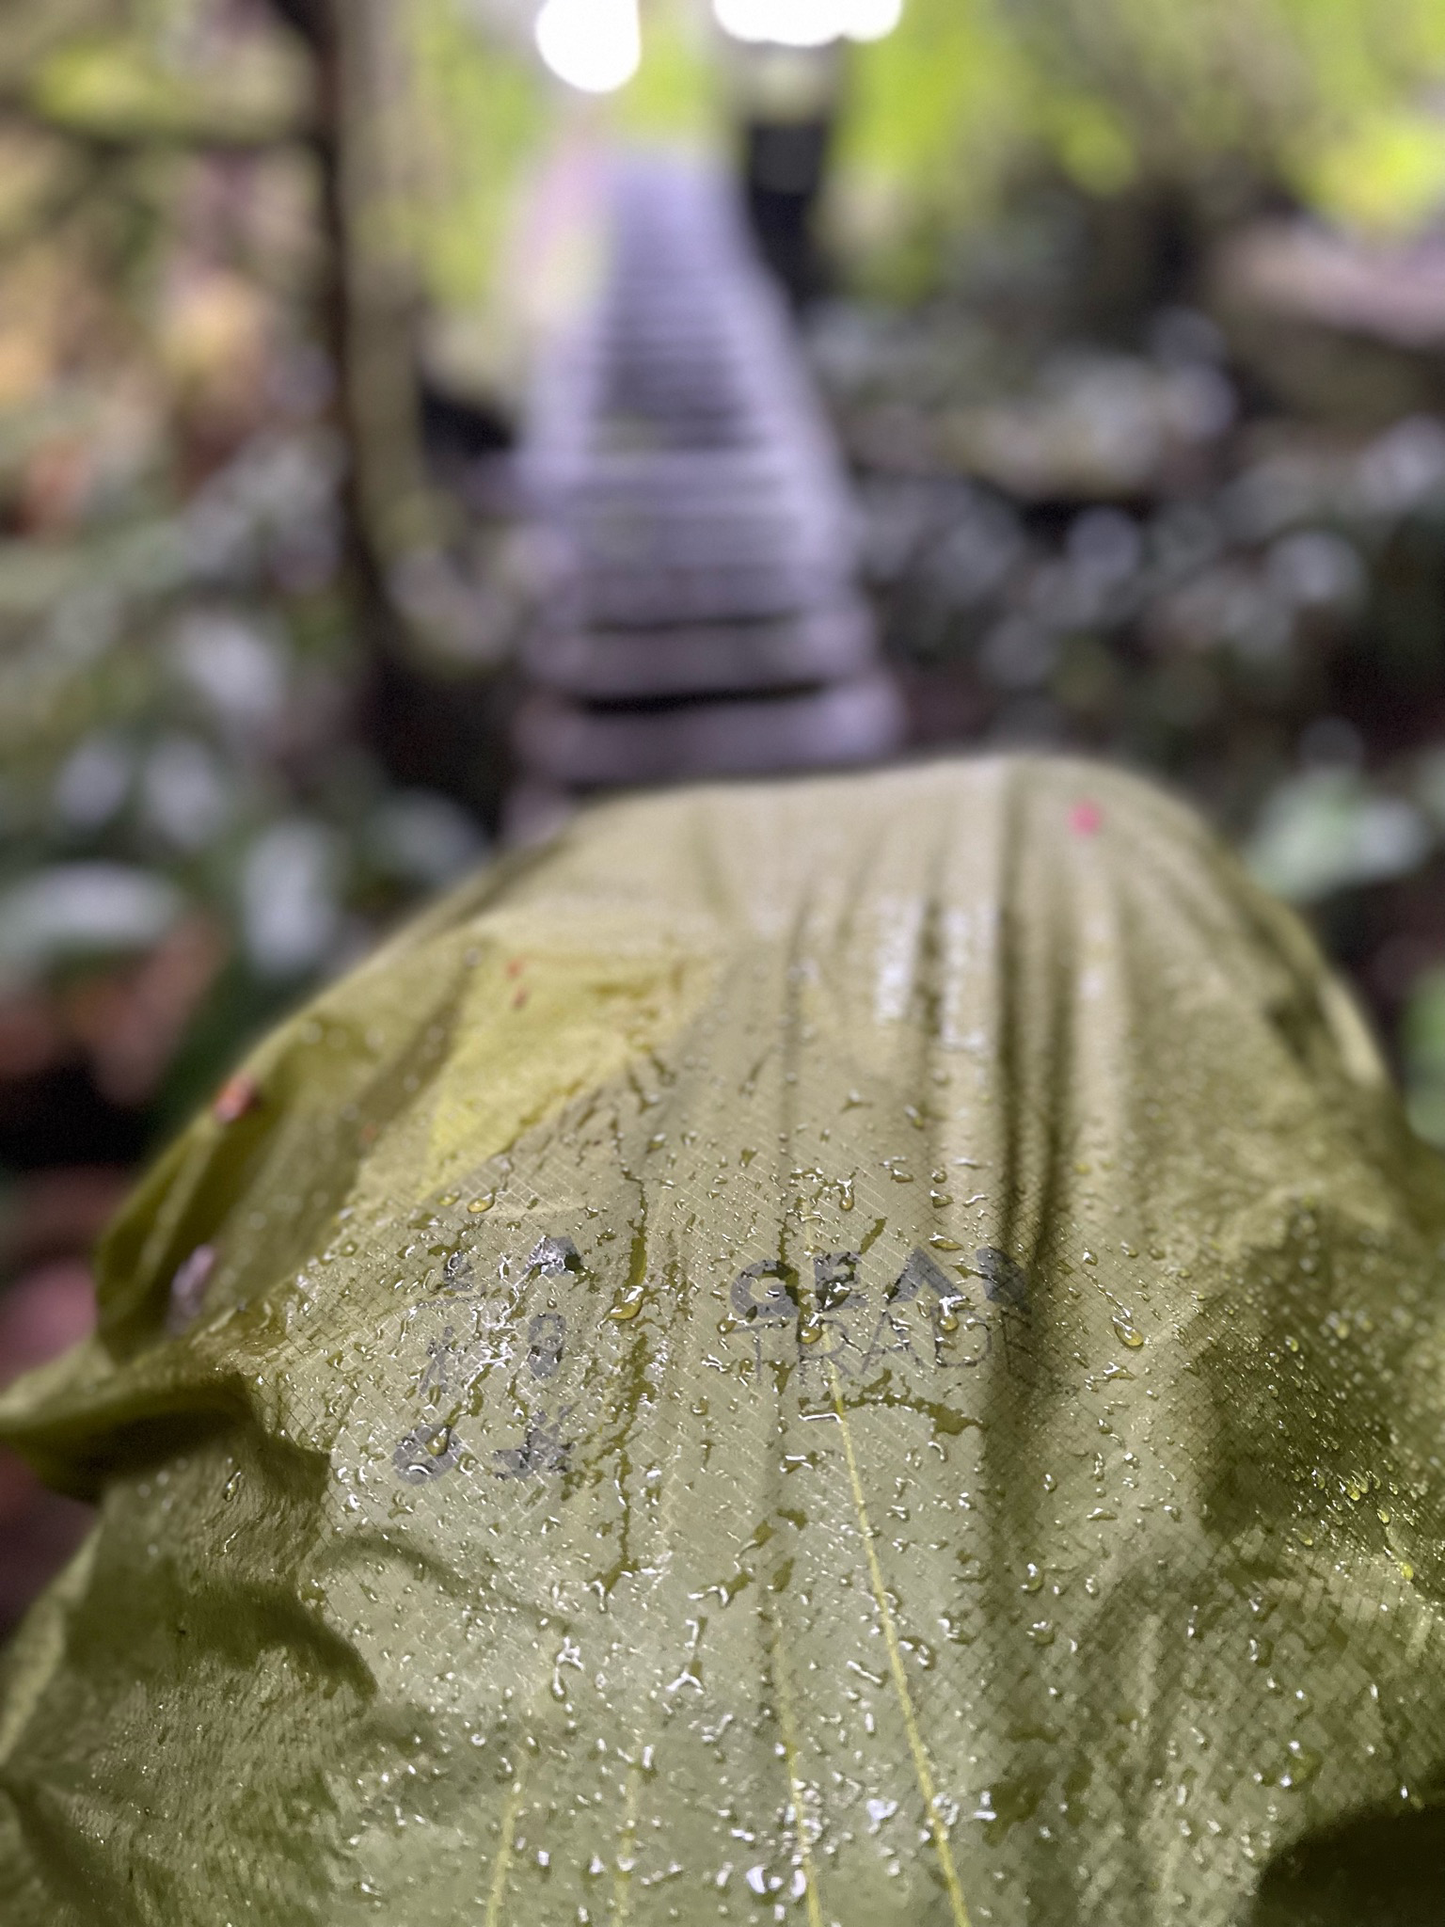 Geartrade - Ultralight Backpacking Rain Cover